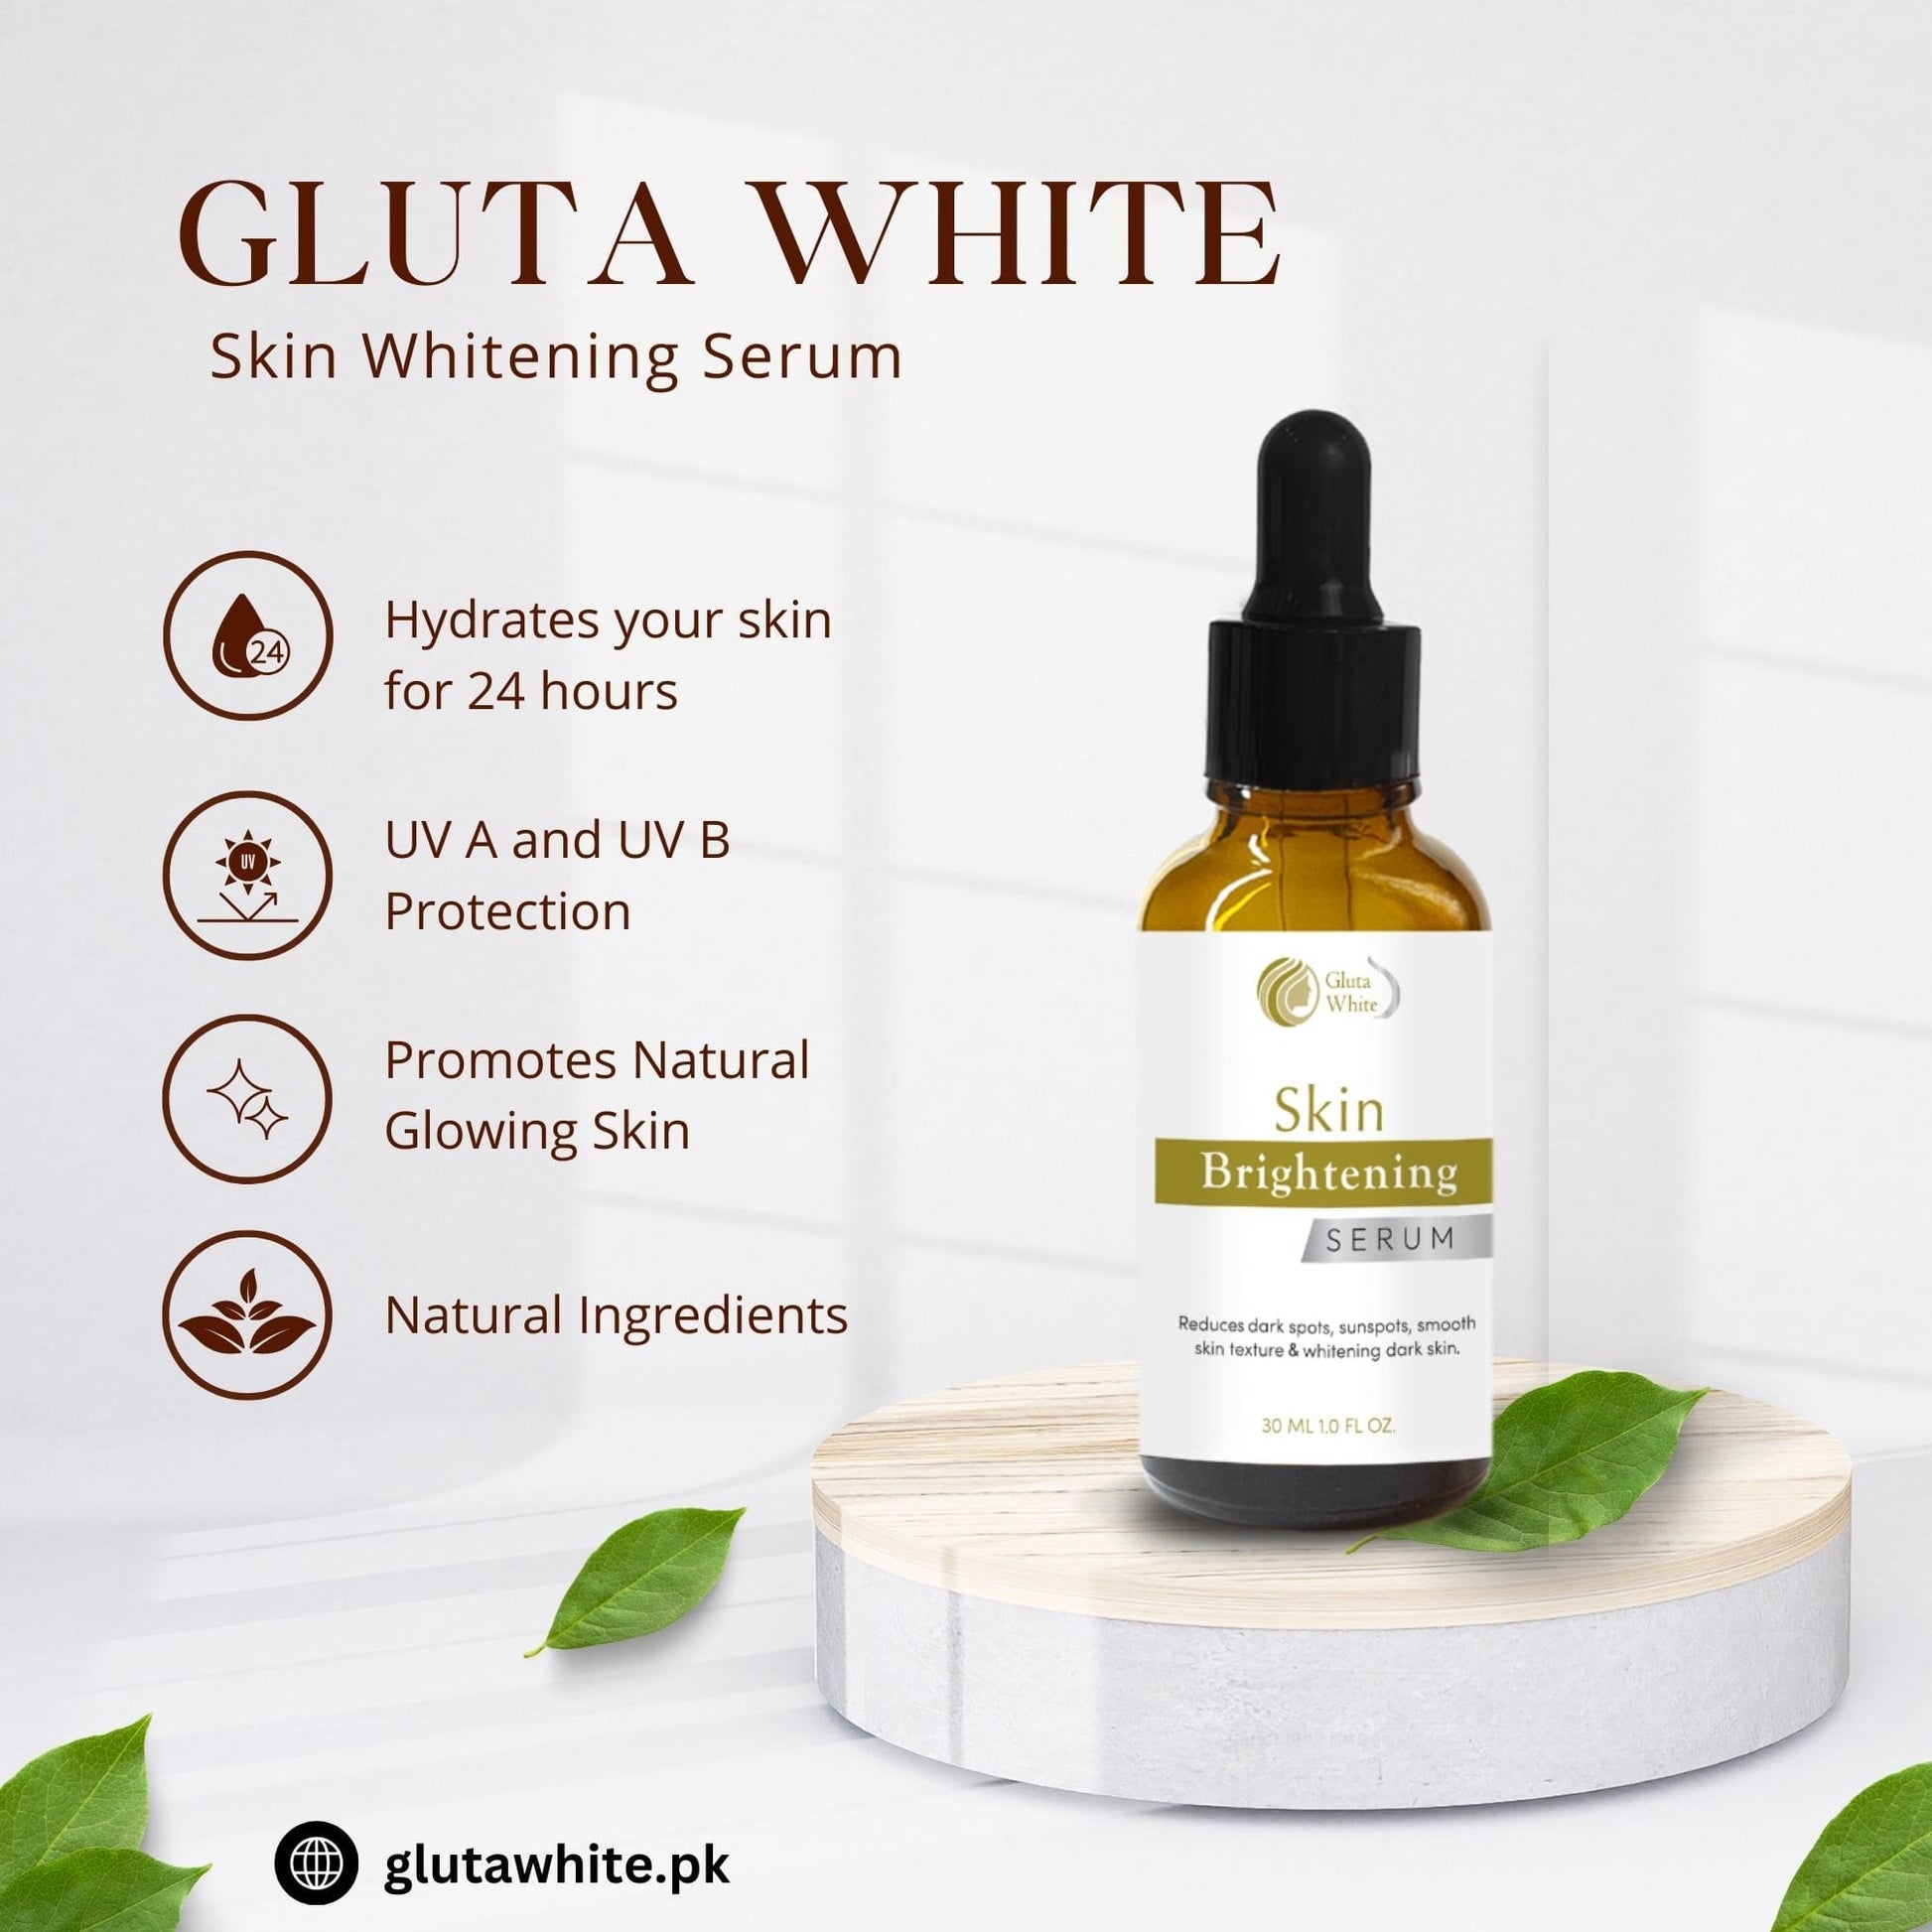 gluta white serum benefits